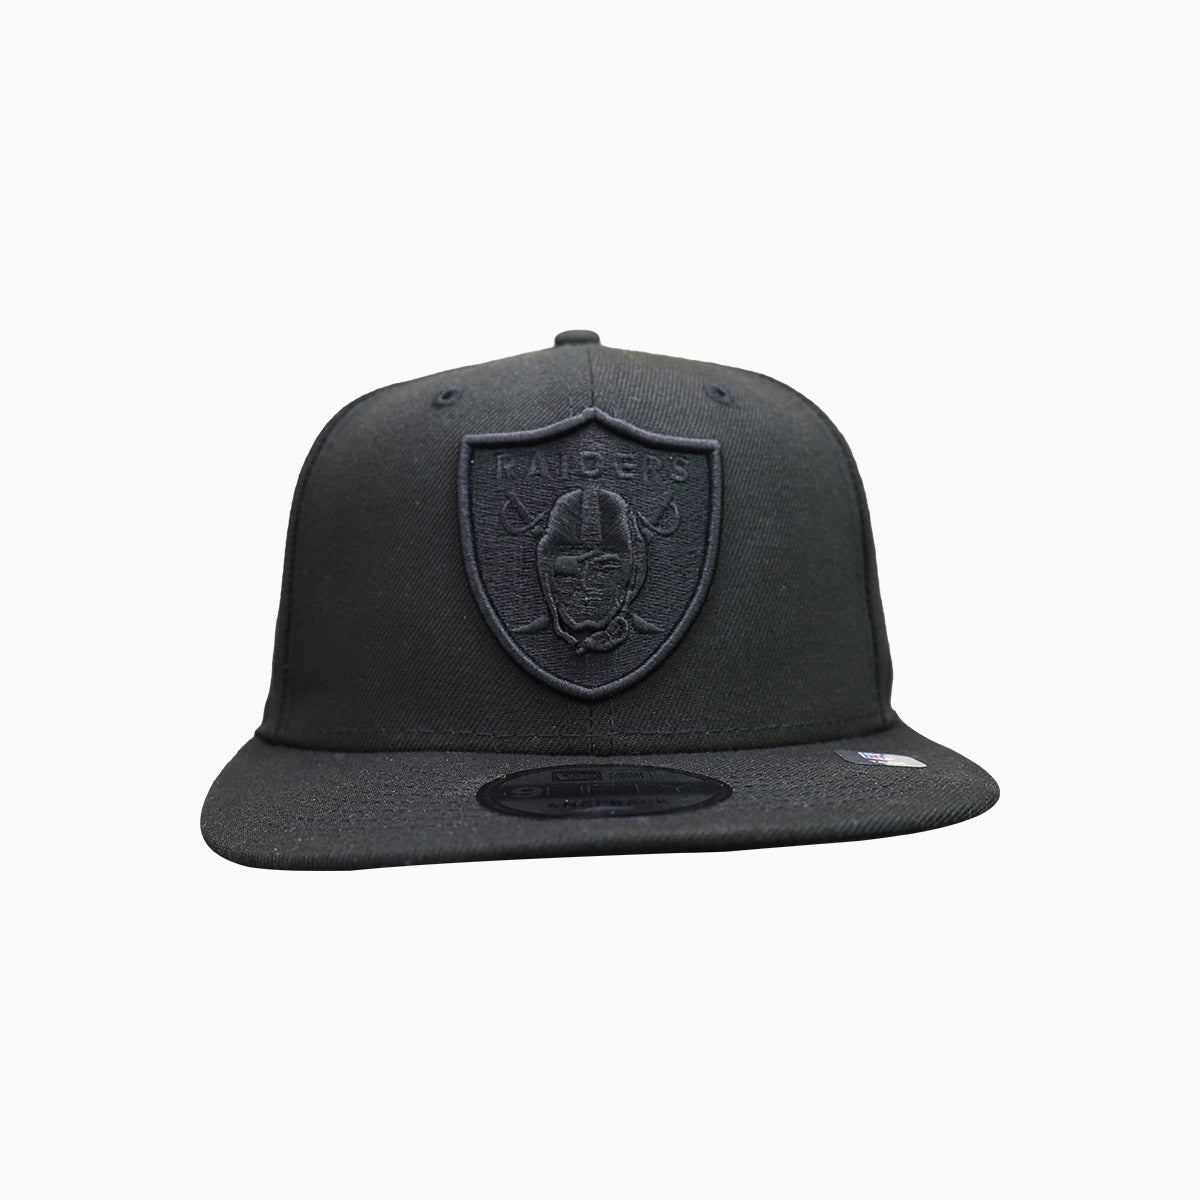 New Era Men's Black Las Vegas Raiders Club 9FIFTY Snapback Hat